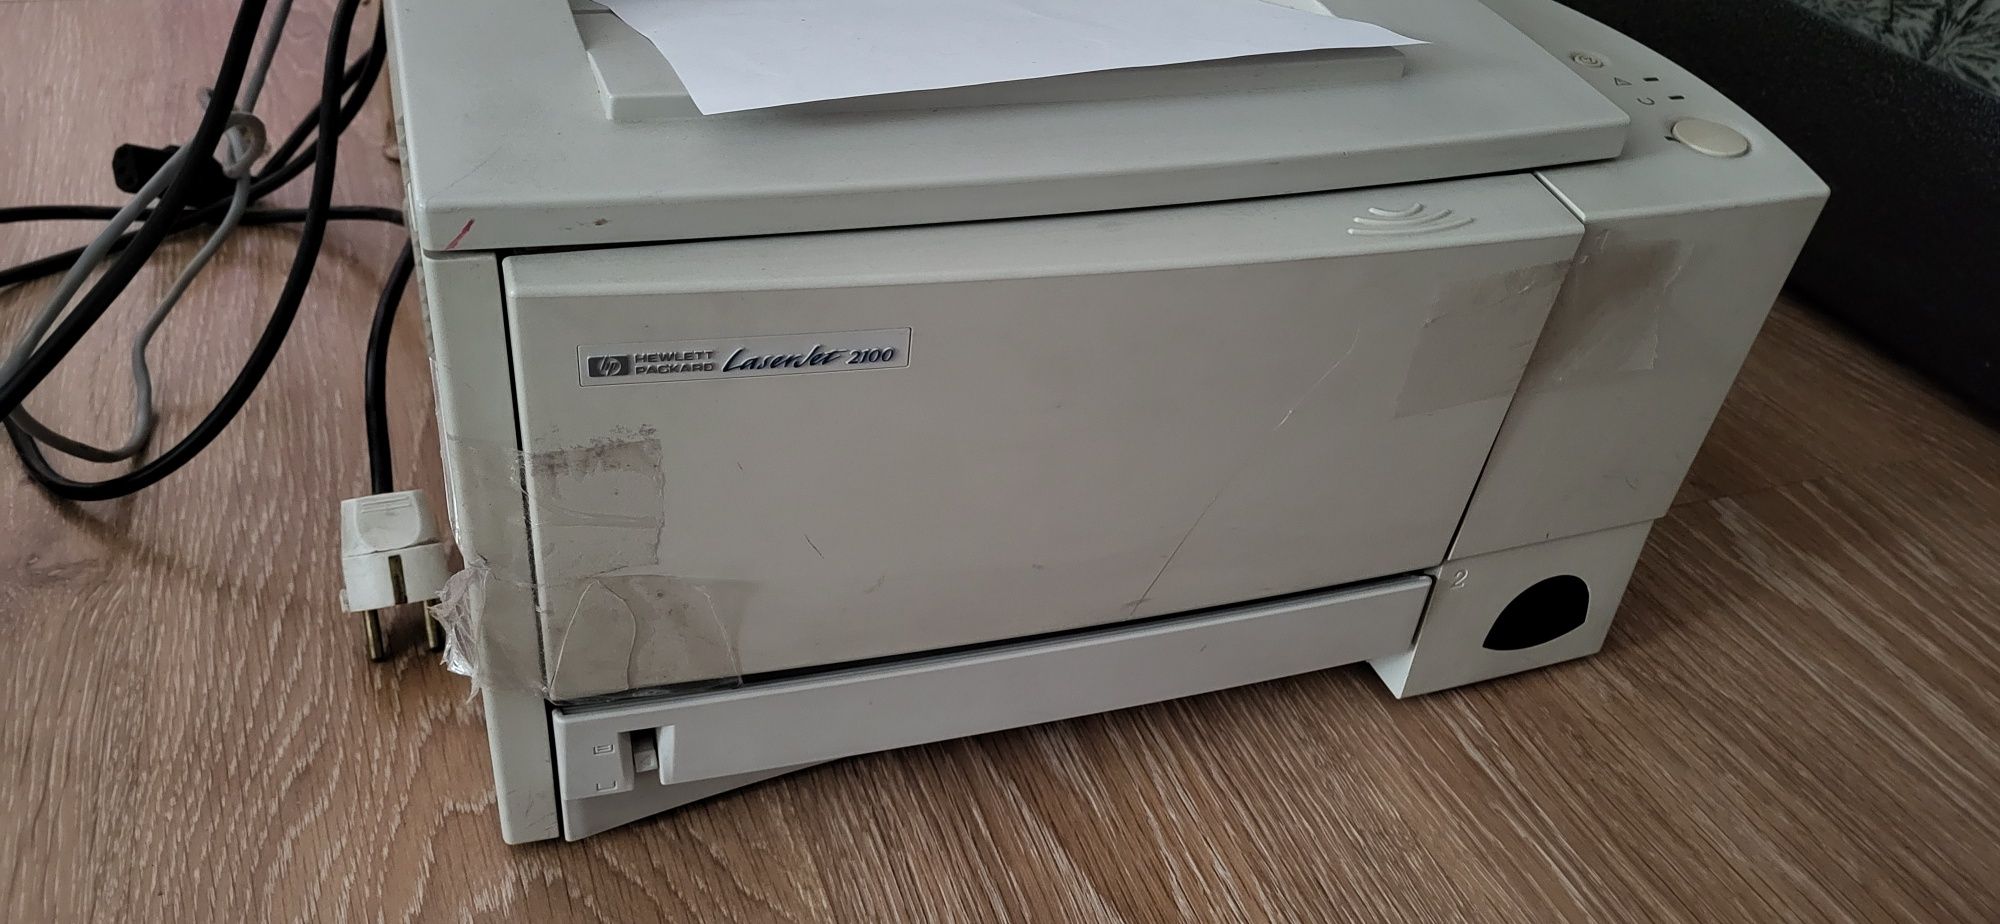 Imprimanta de retea cablu HP LaserJet 2100 cu inca un toner nou